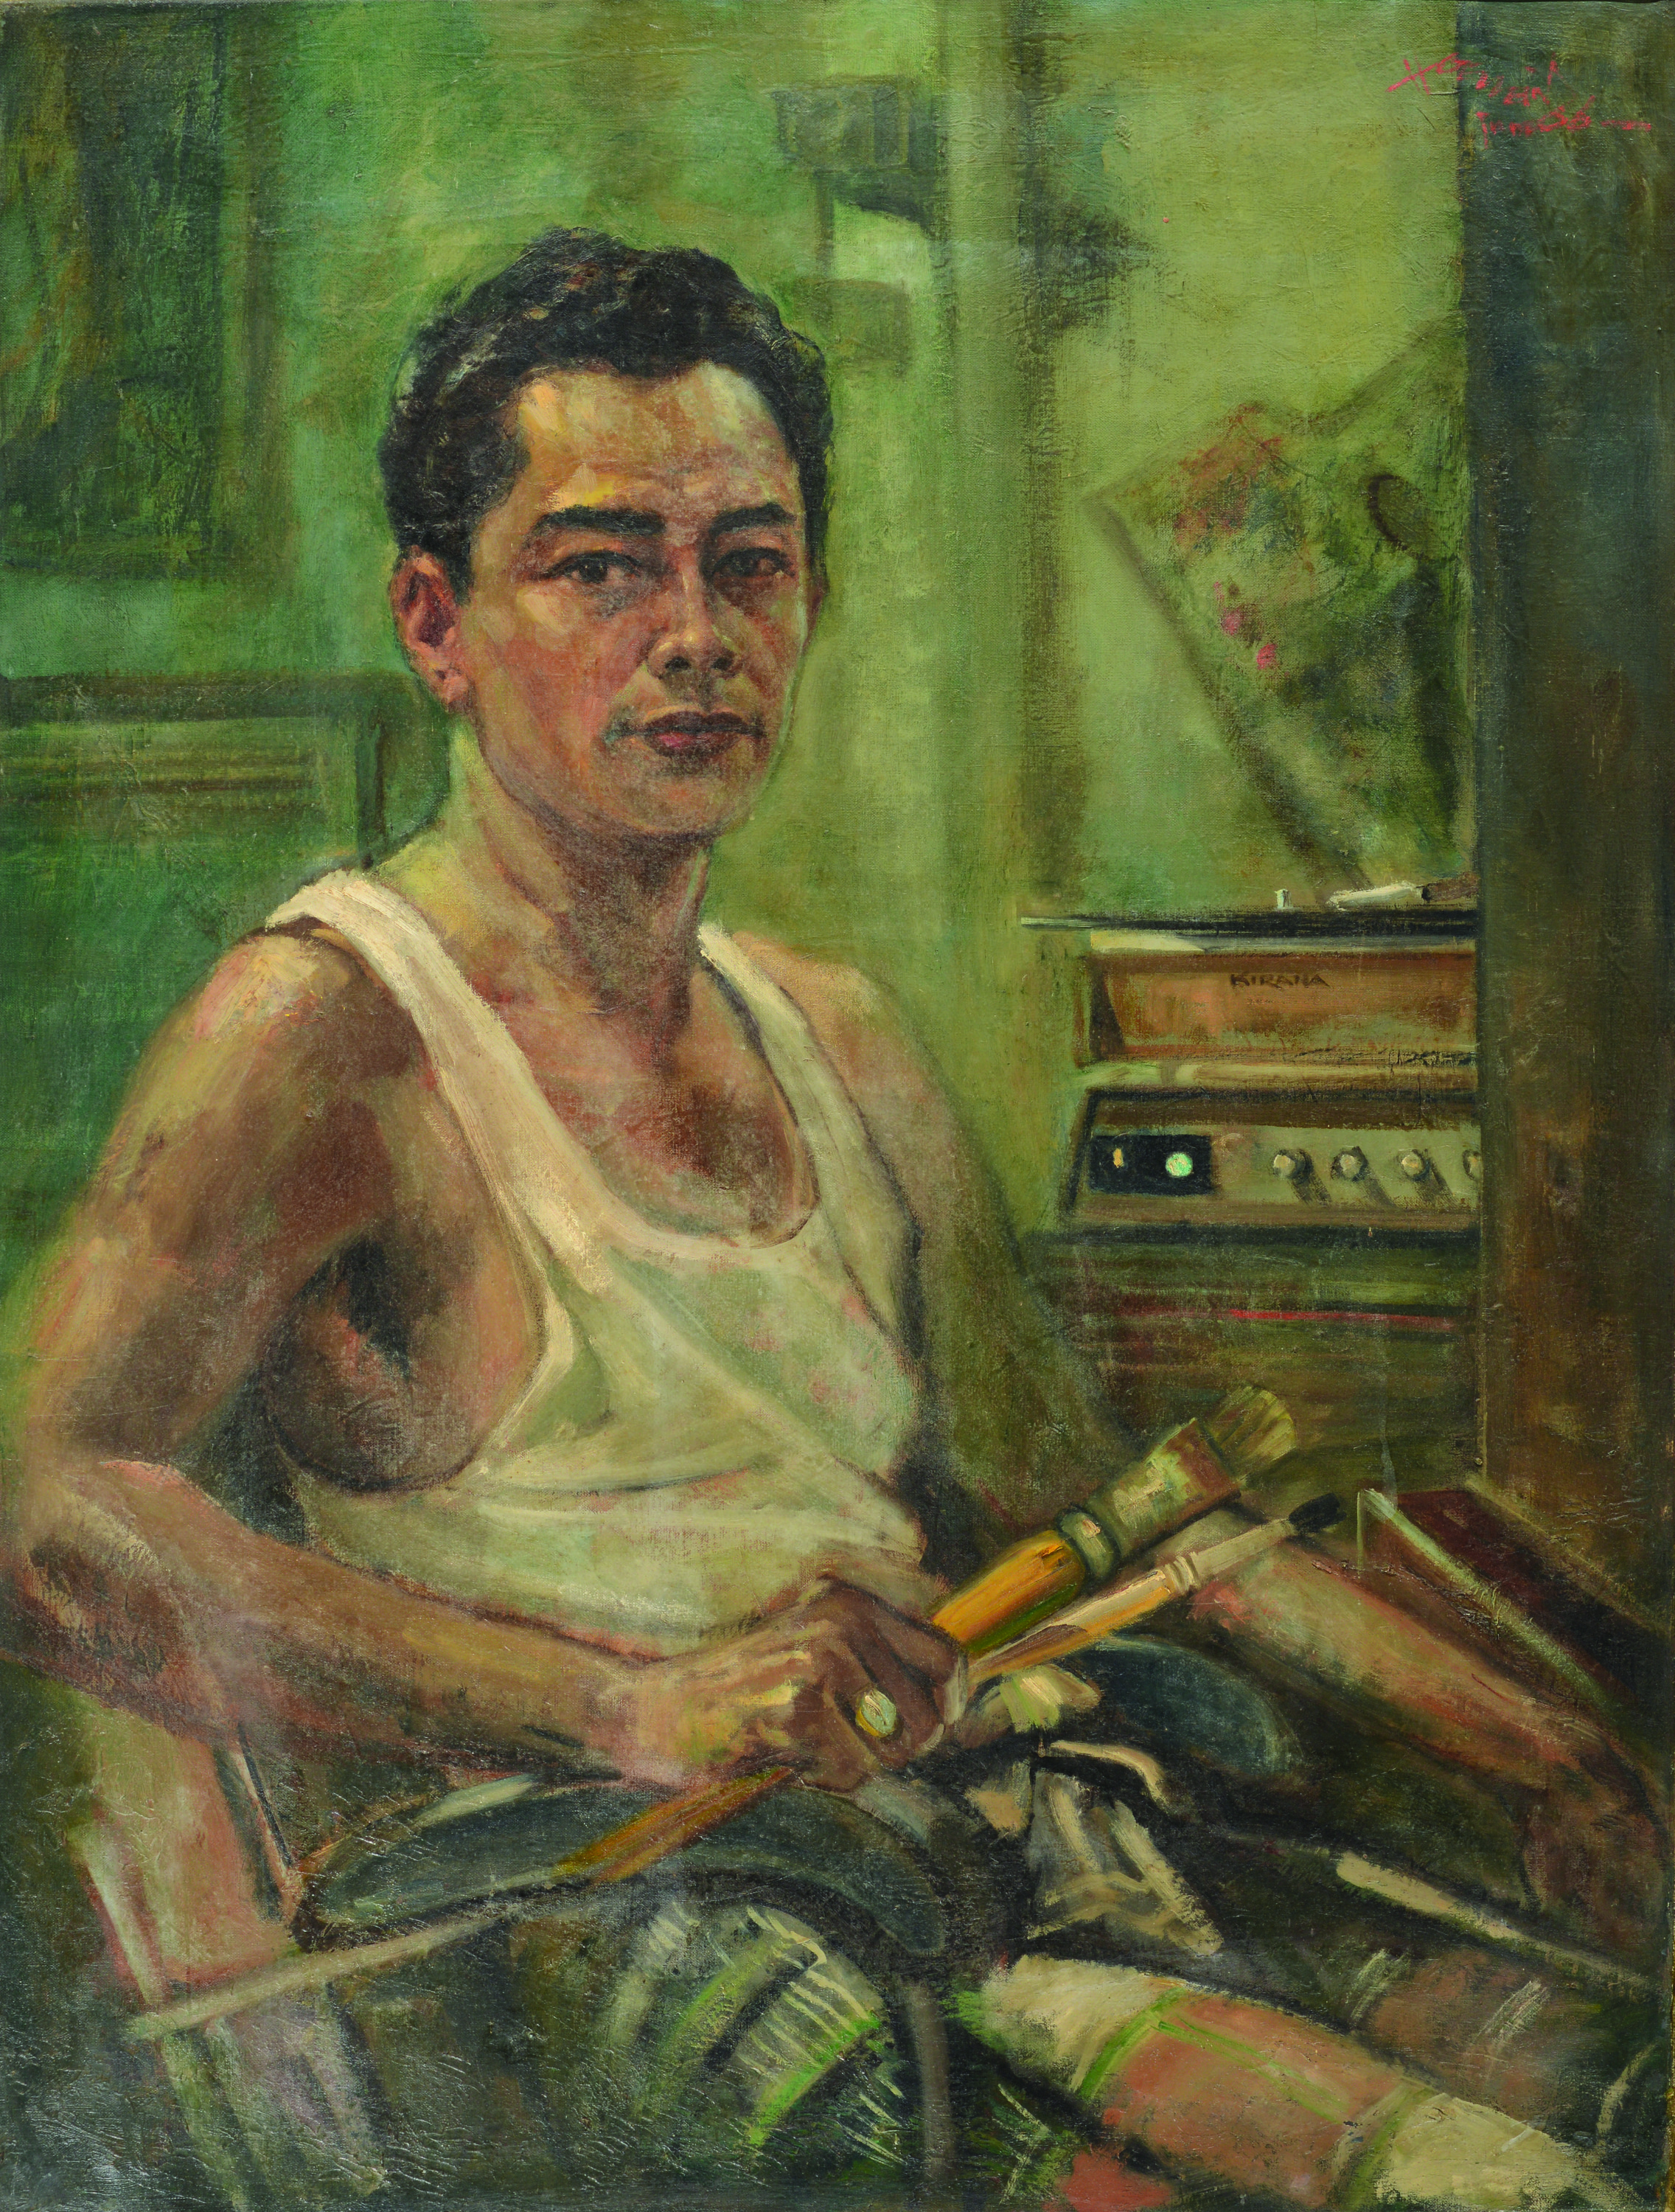 Artist's Self-Portrait